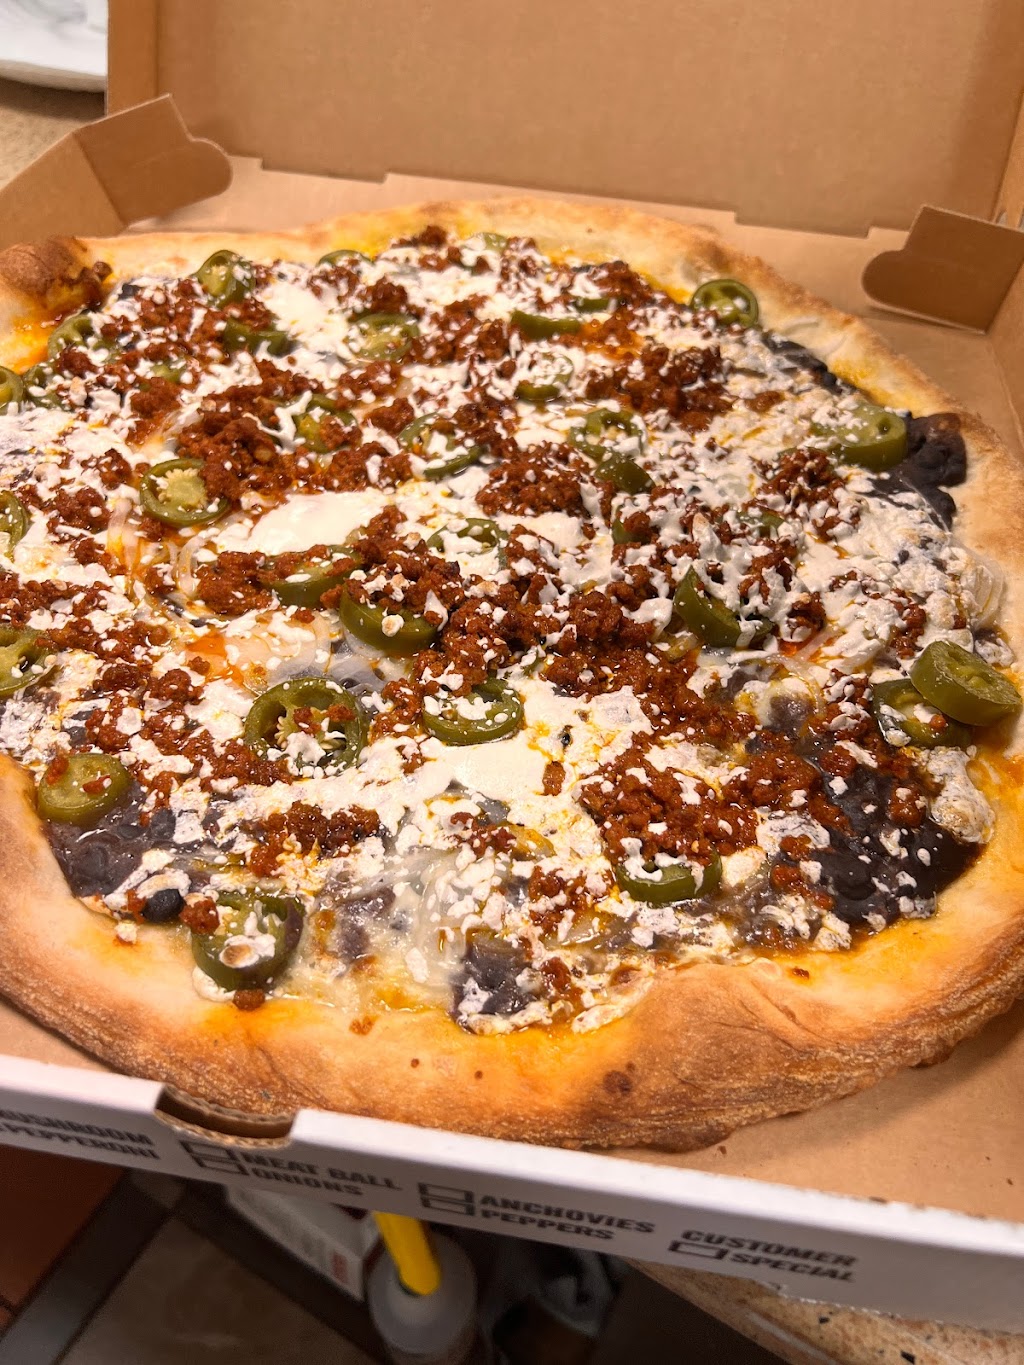 Felicita Pizzeria & Mexican Restaurant | 349 Maple Pl, Keyport, NJ 07735, USA | Phone: (732) 217-1846